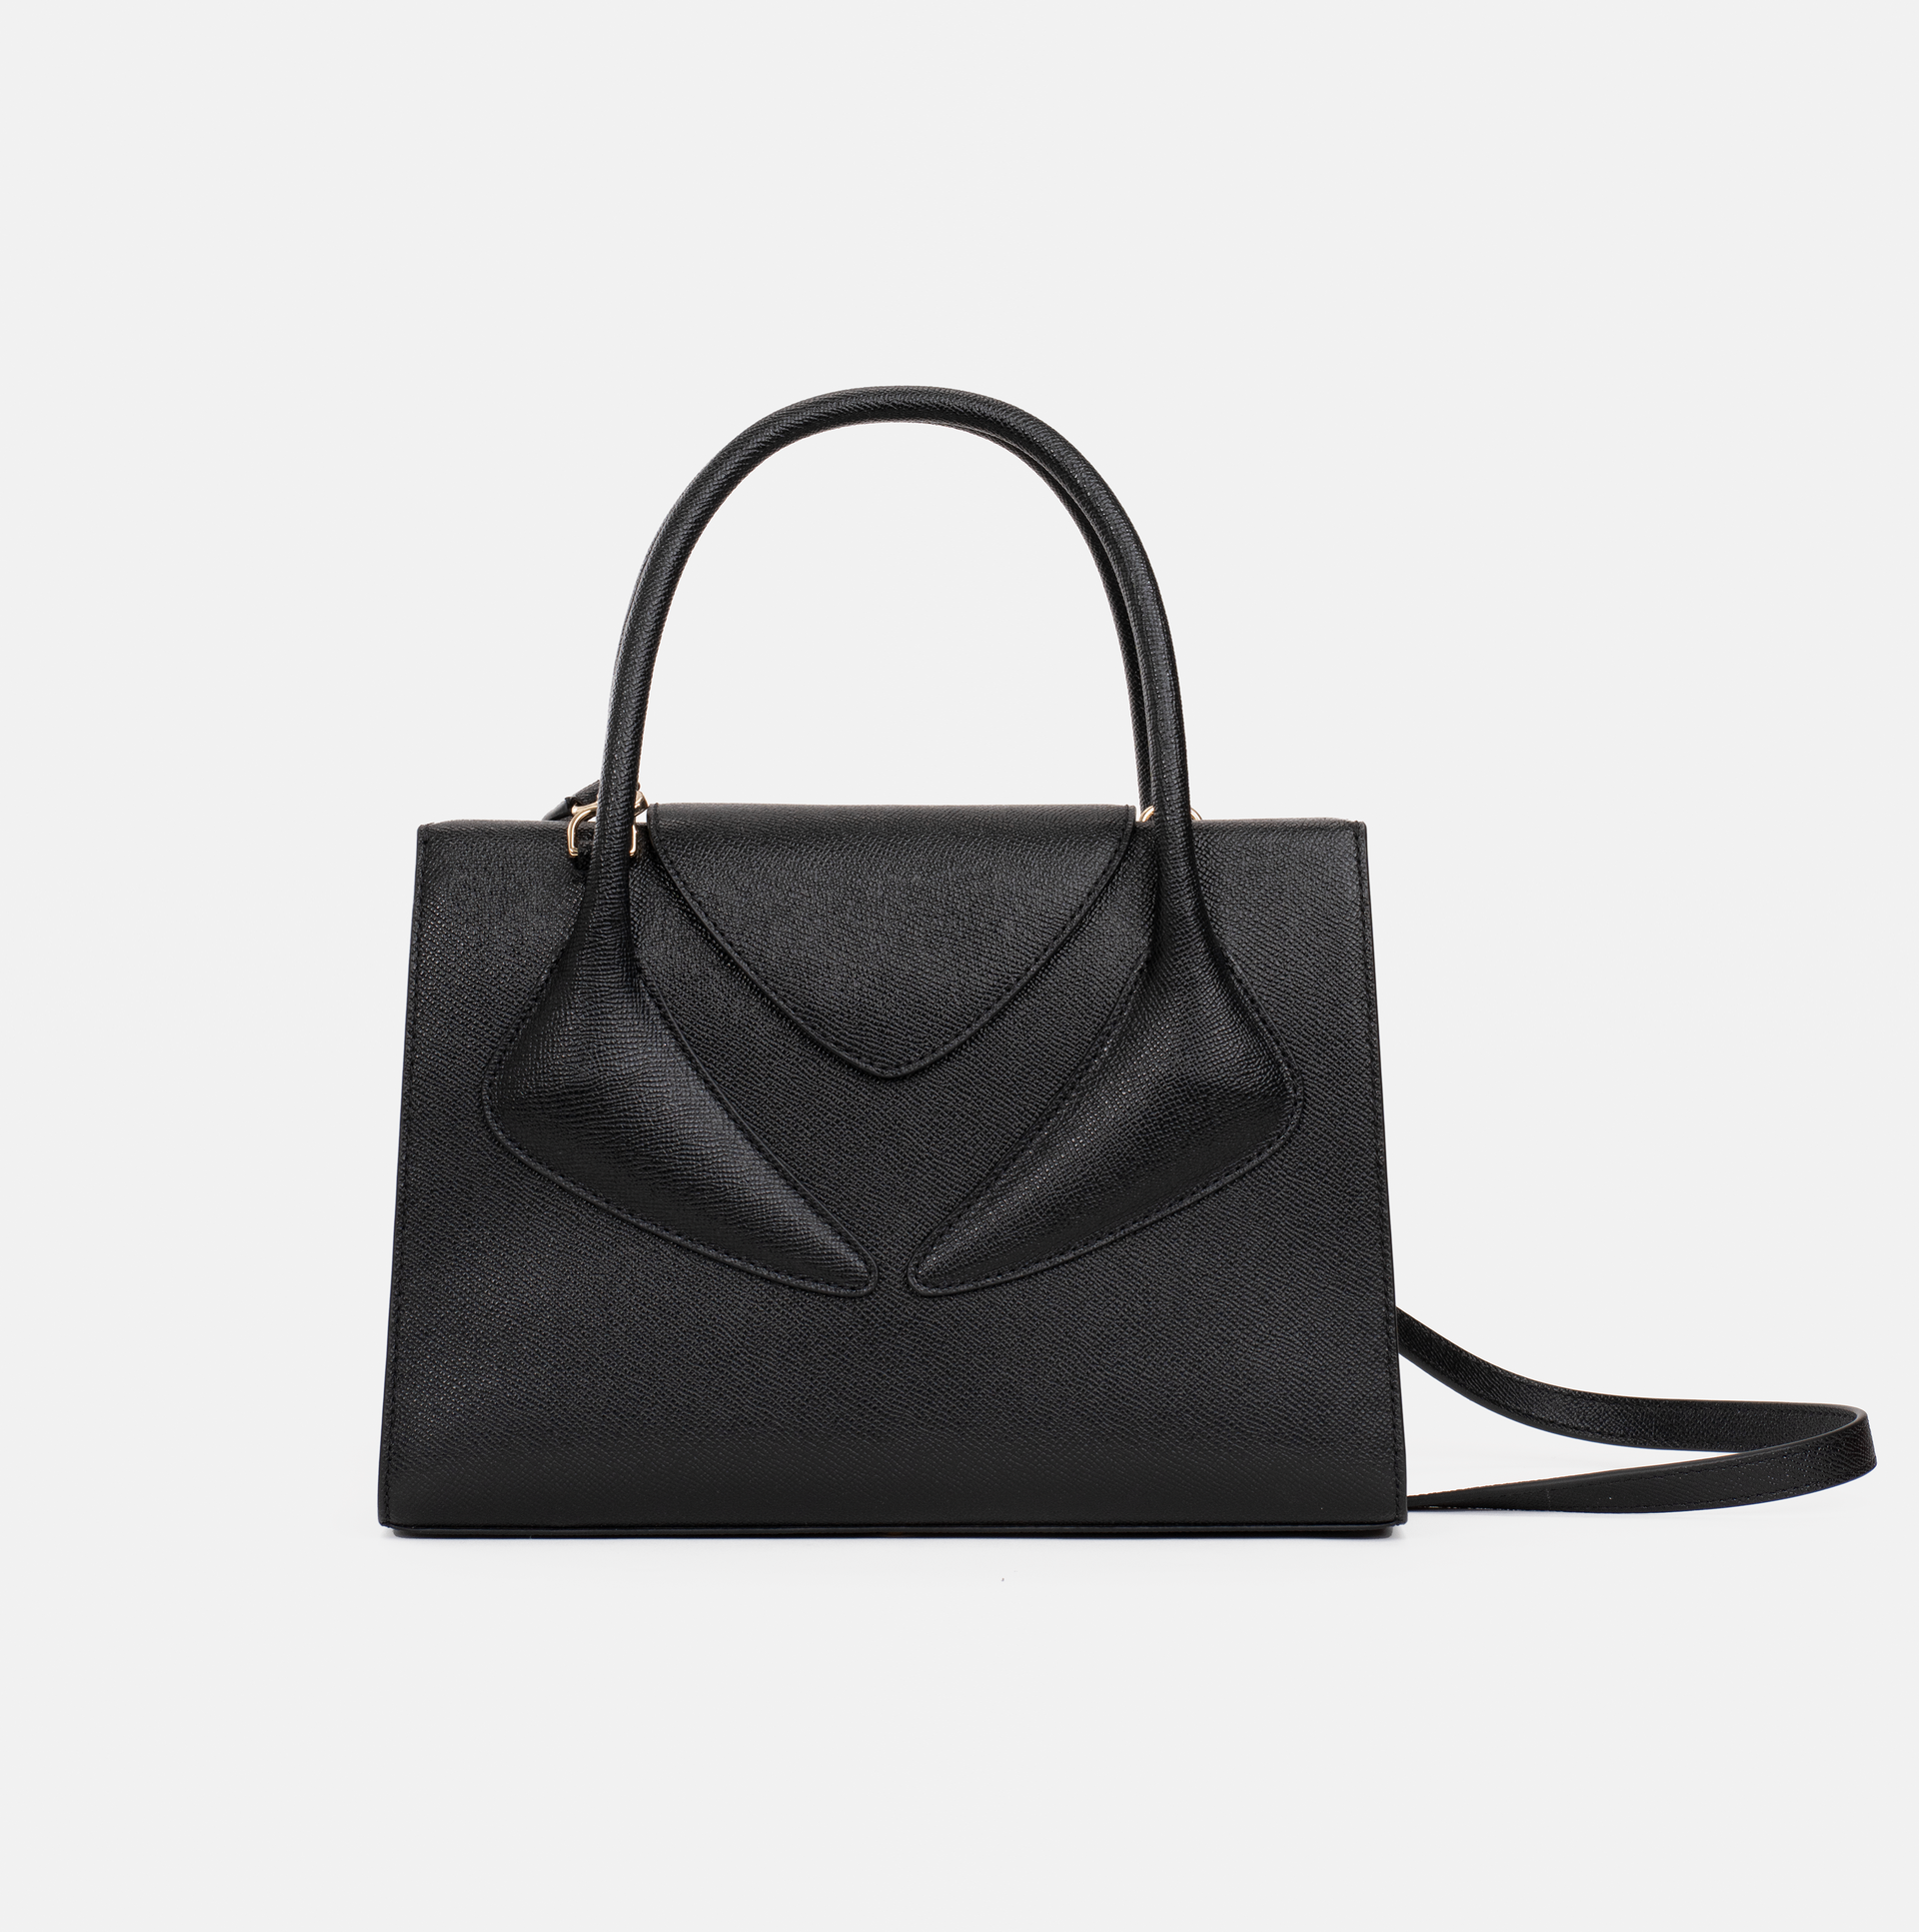 Madelon cross grain embossed leather shoulder bag in black